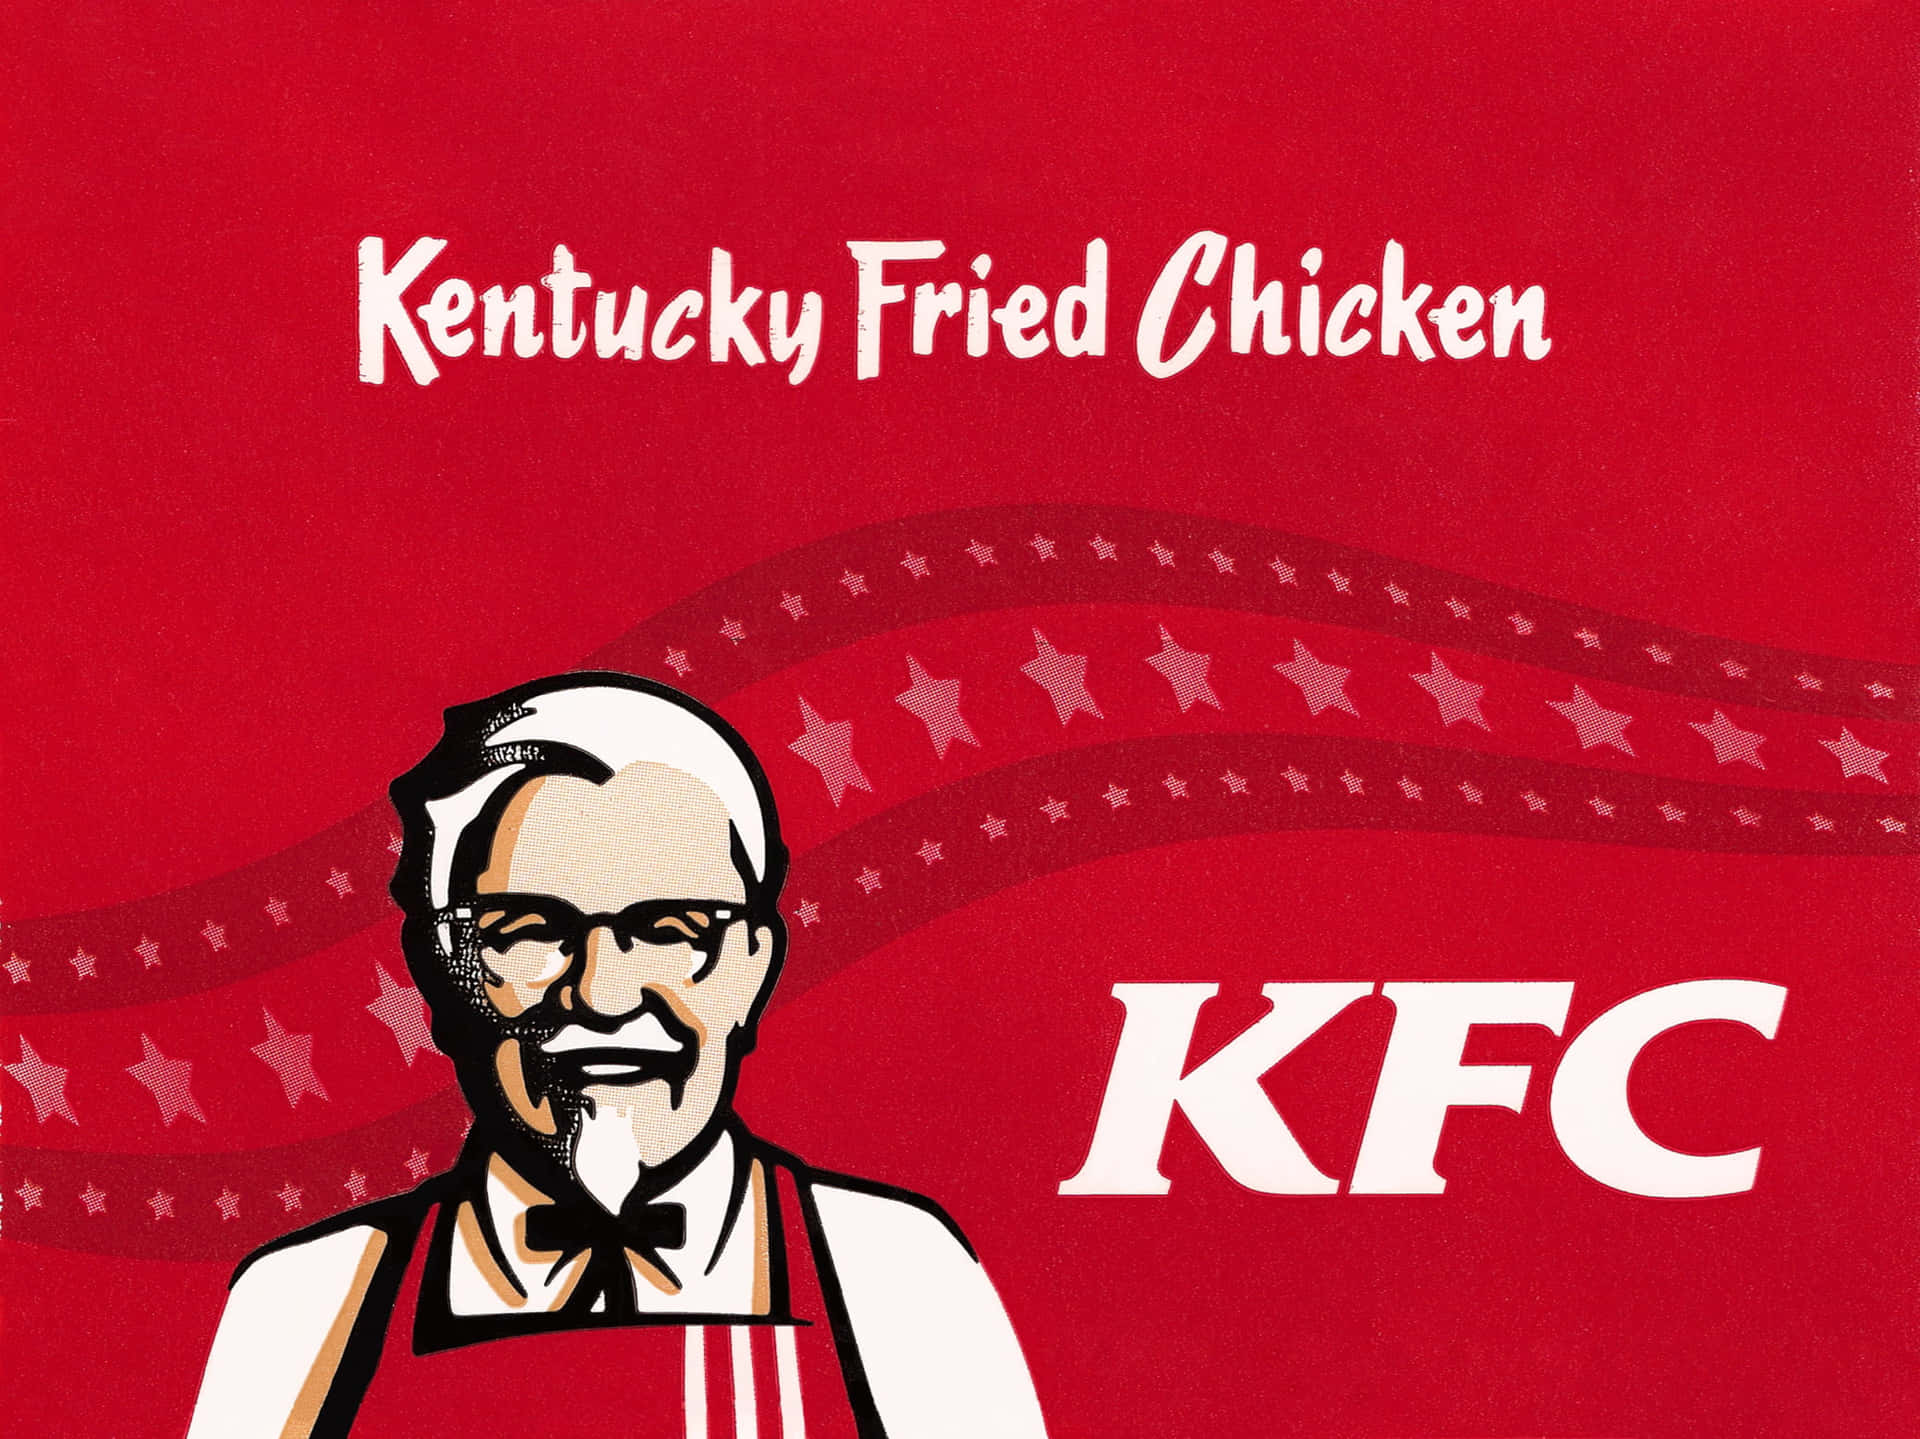 KFC's legendary fried chicken